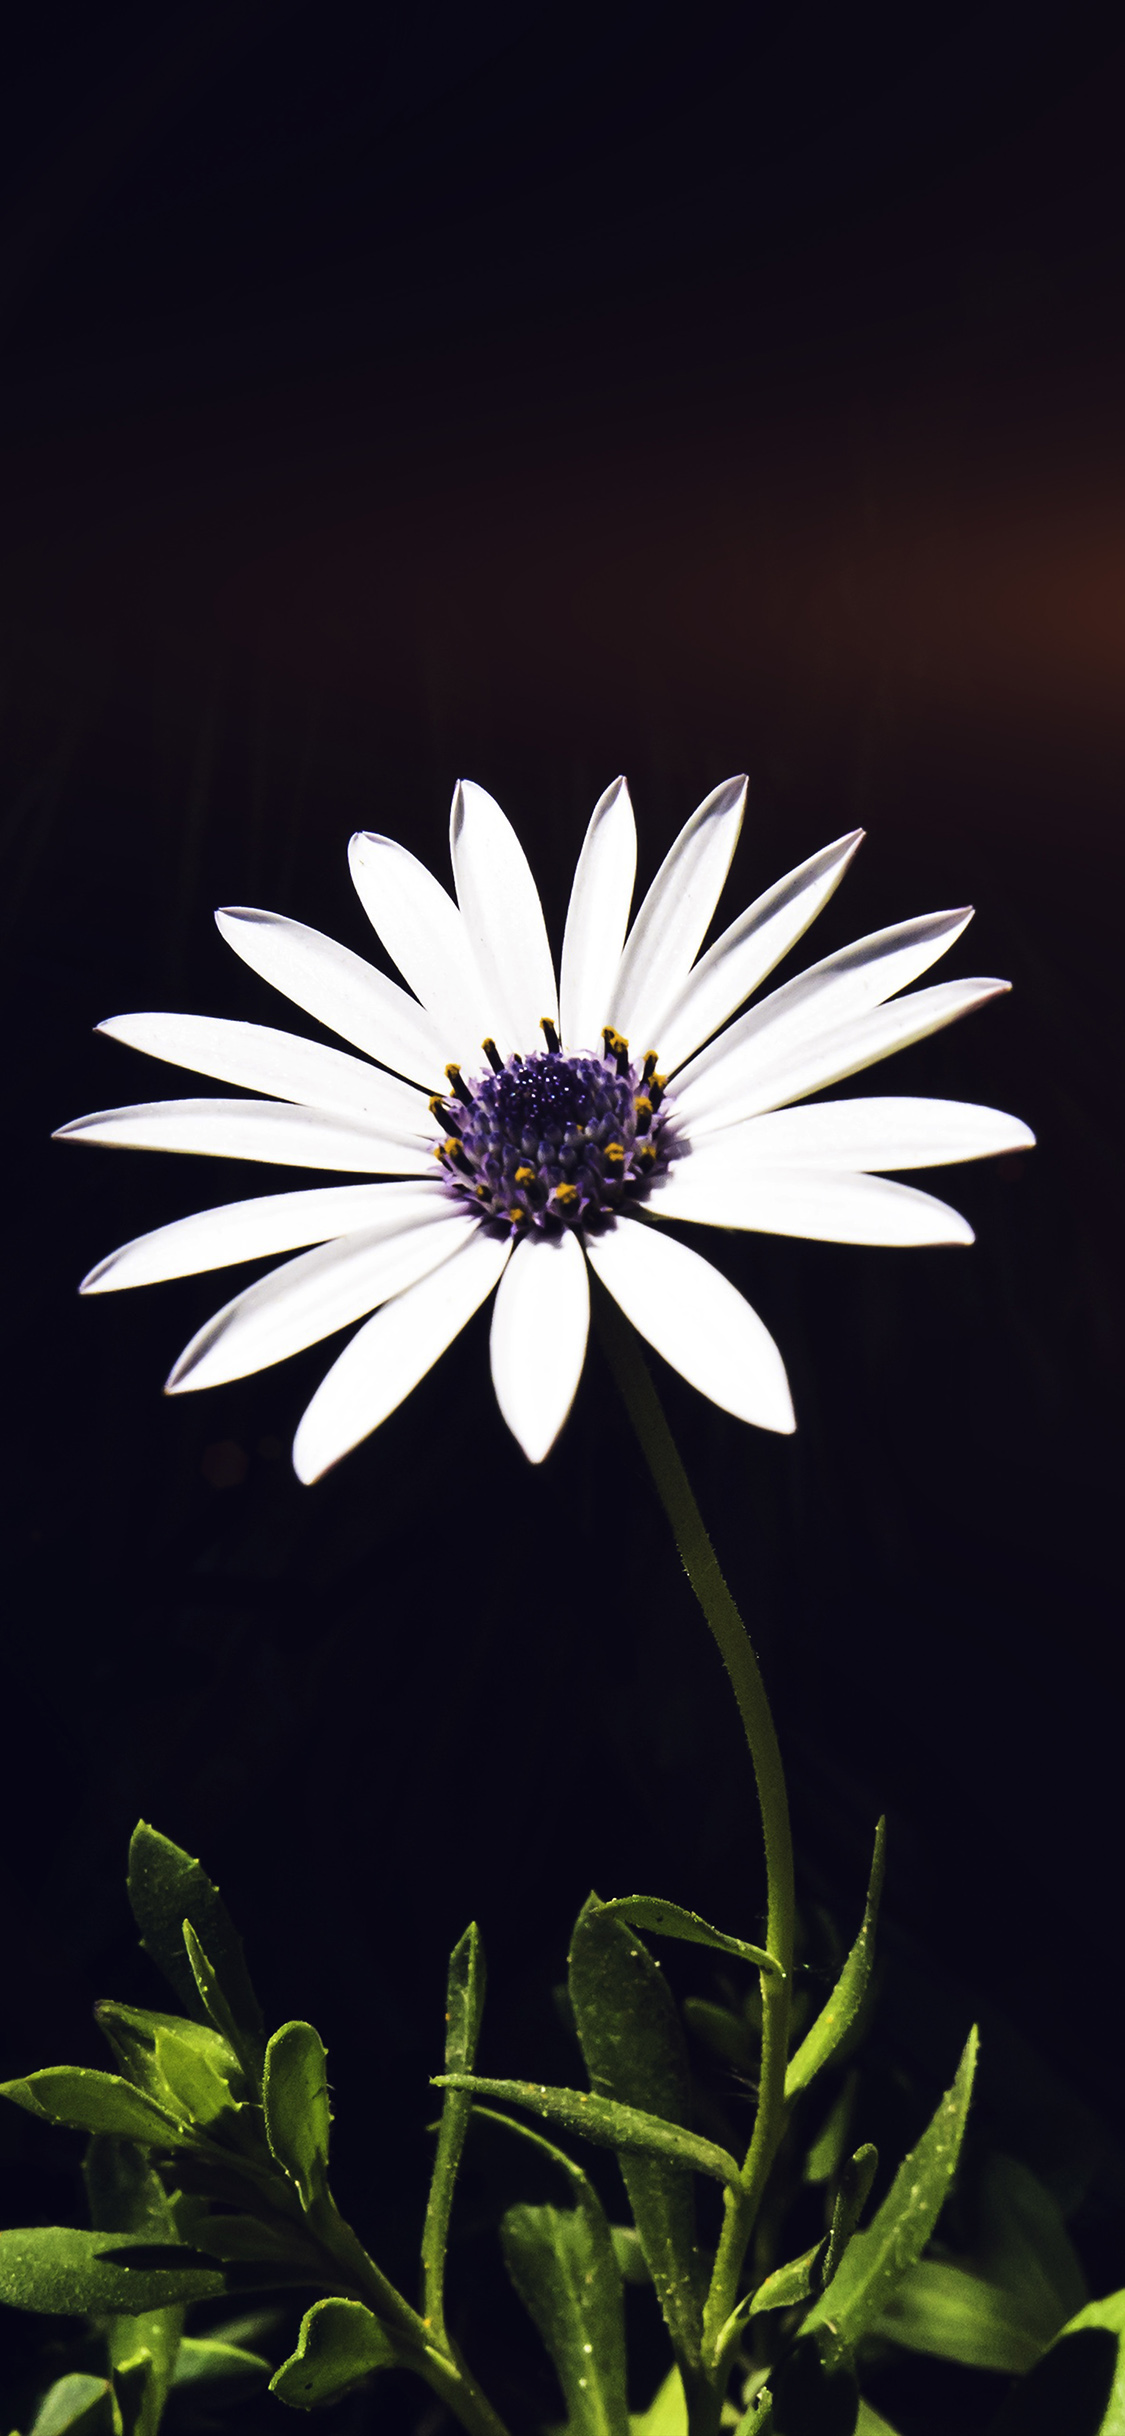 iPhone X wallpaper. flower white spring flare